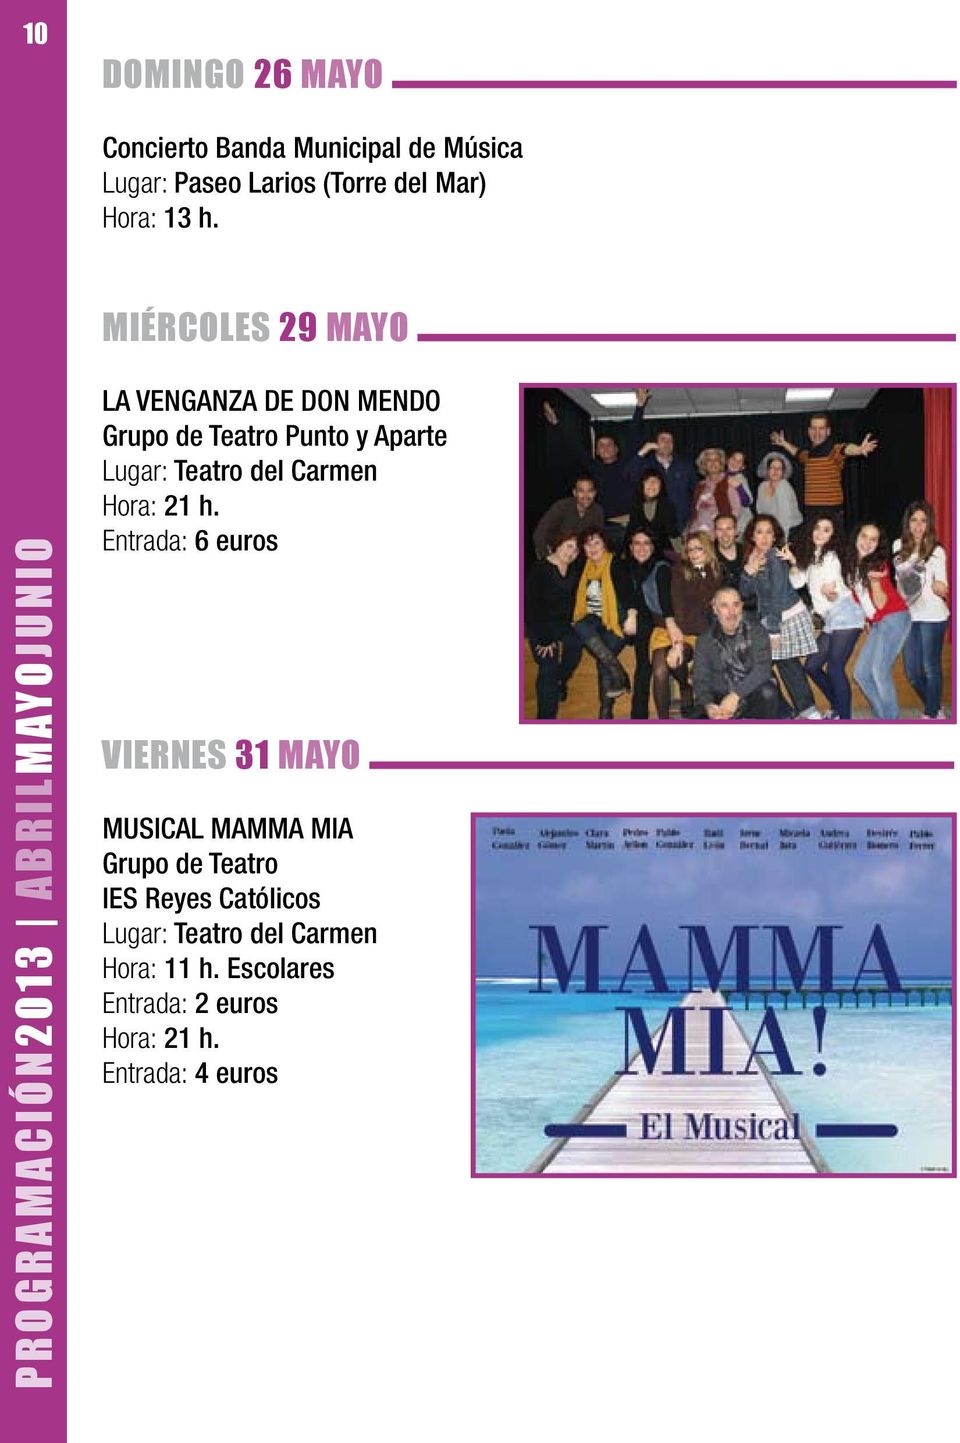 Aparte Entrada: 6 euros VIERNES 31 MAYO MUSICAL MAMMA MIA Grupo de